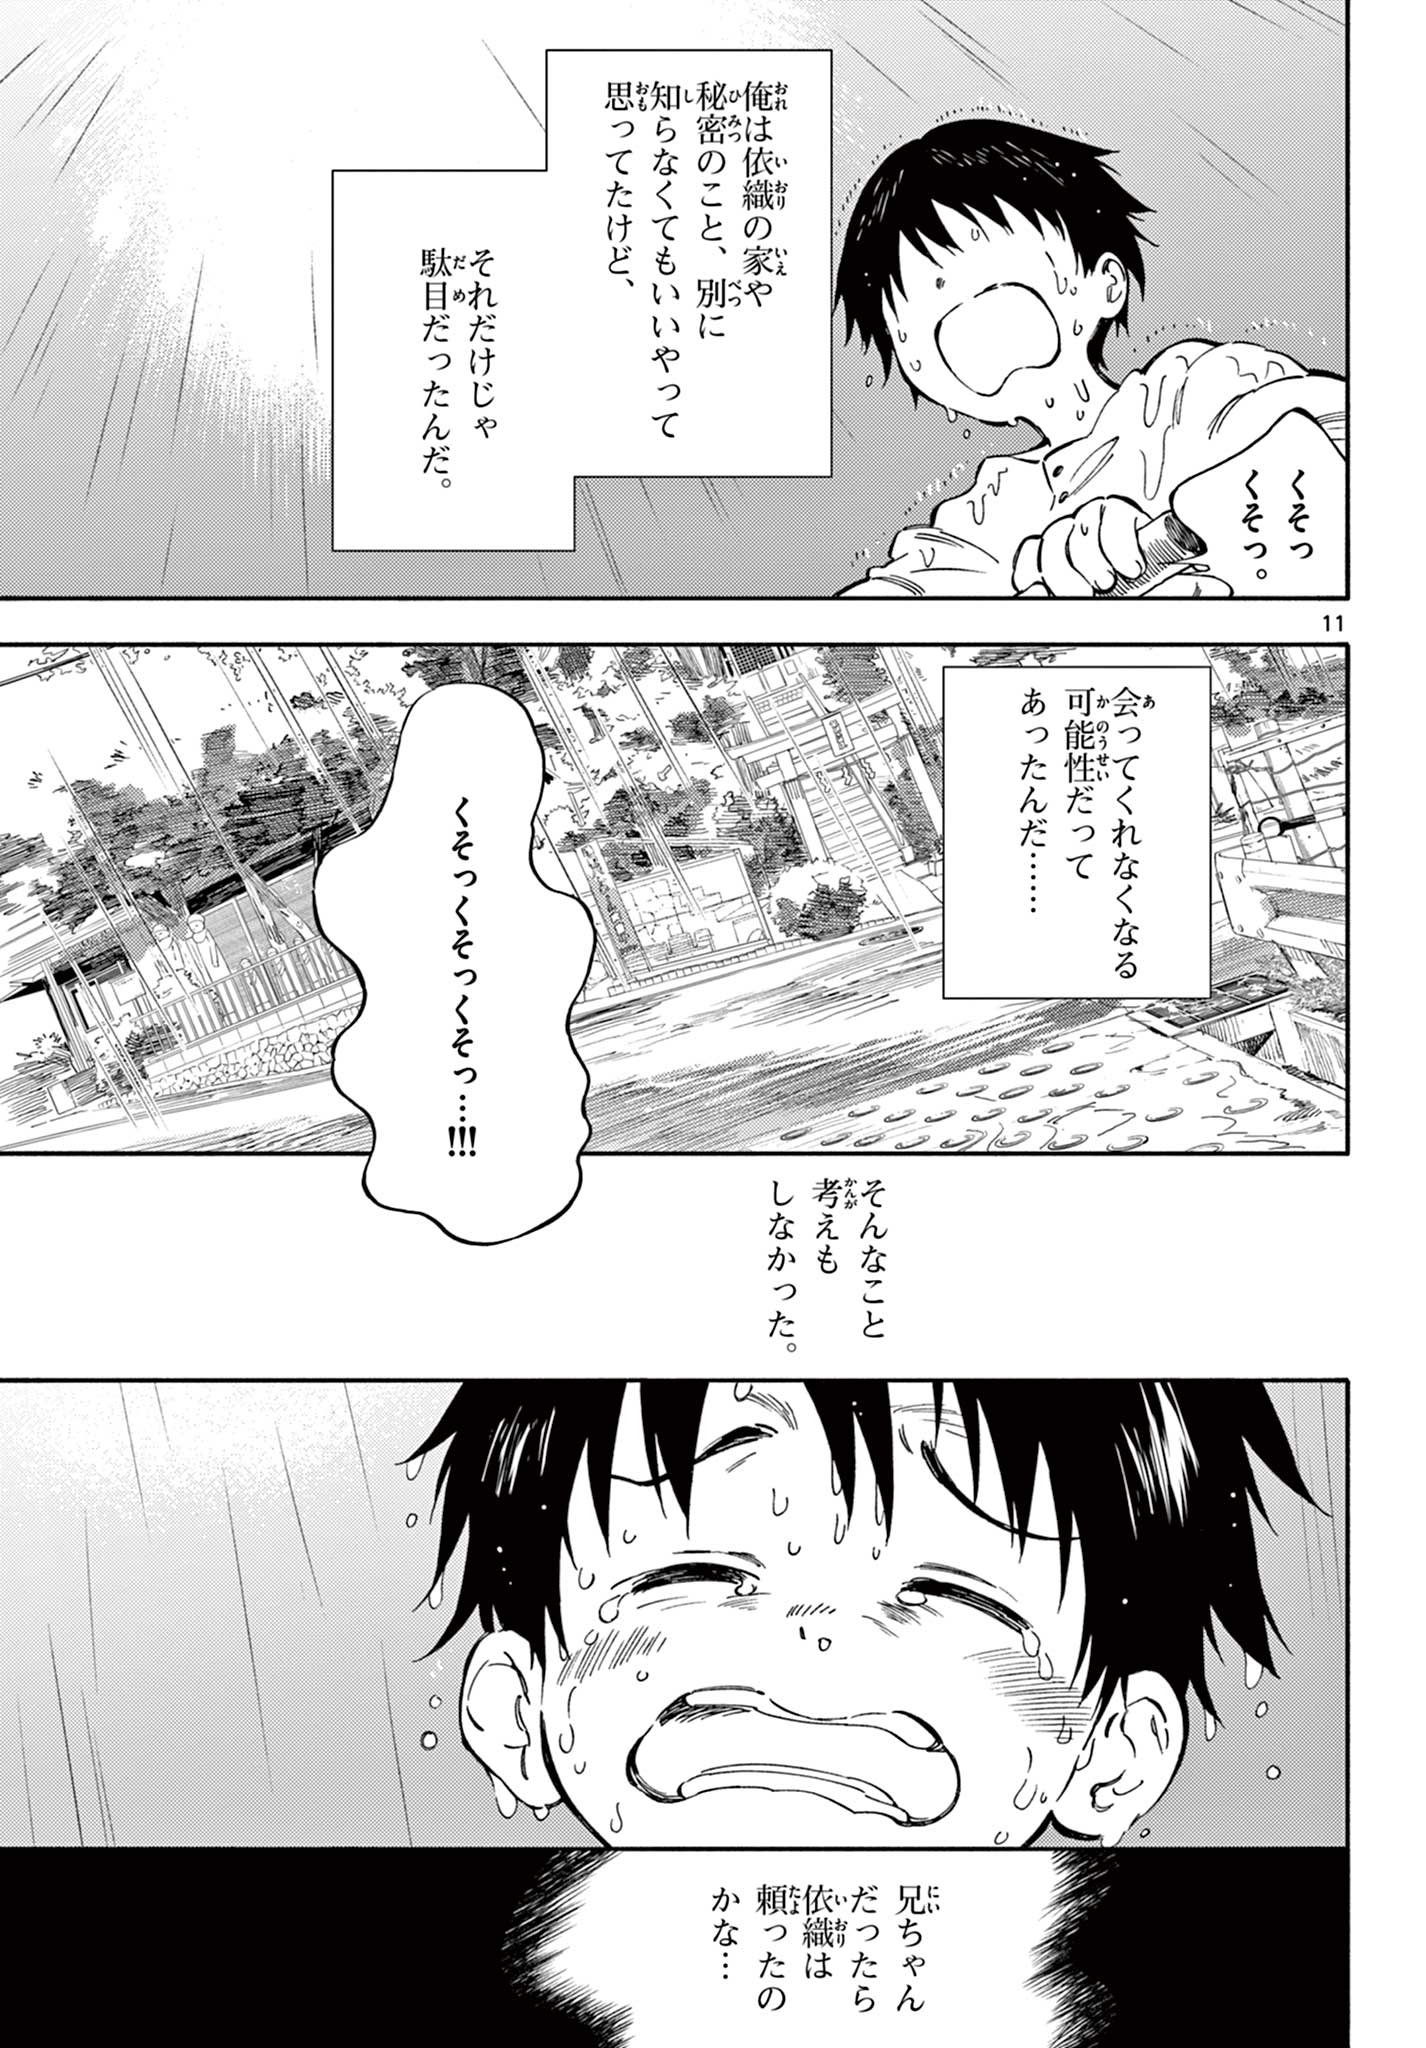 Nami no Shijima no Horizont - Chapter 13.1 - Page 11